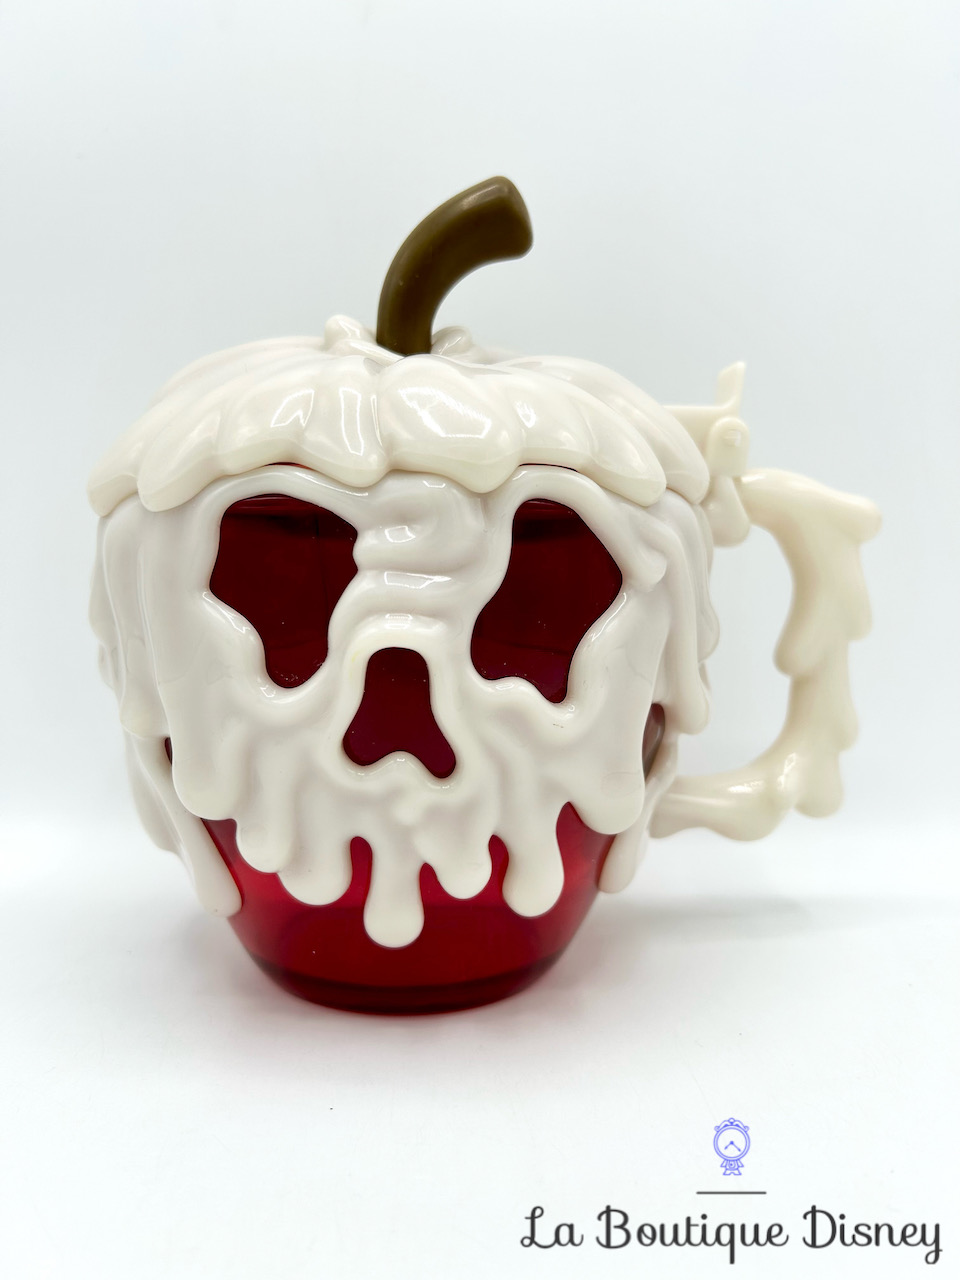 Tasse plastique Pomme Empoisonnée Blanche Neige Disney Parks mug Disneyland Halloween 2017 seau pop corn rouge